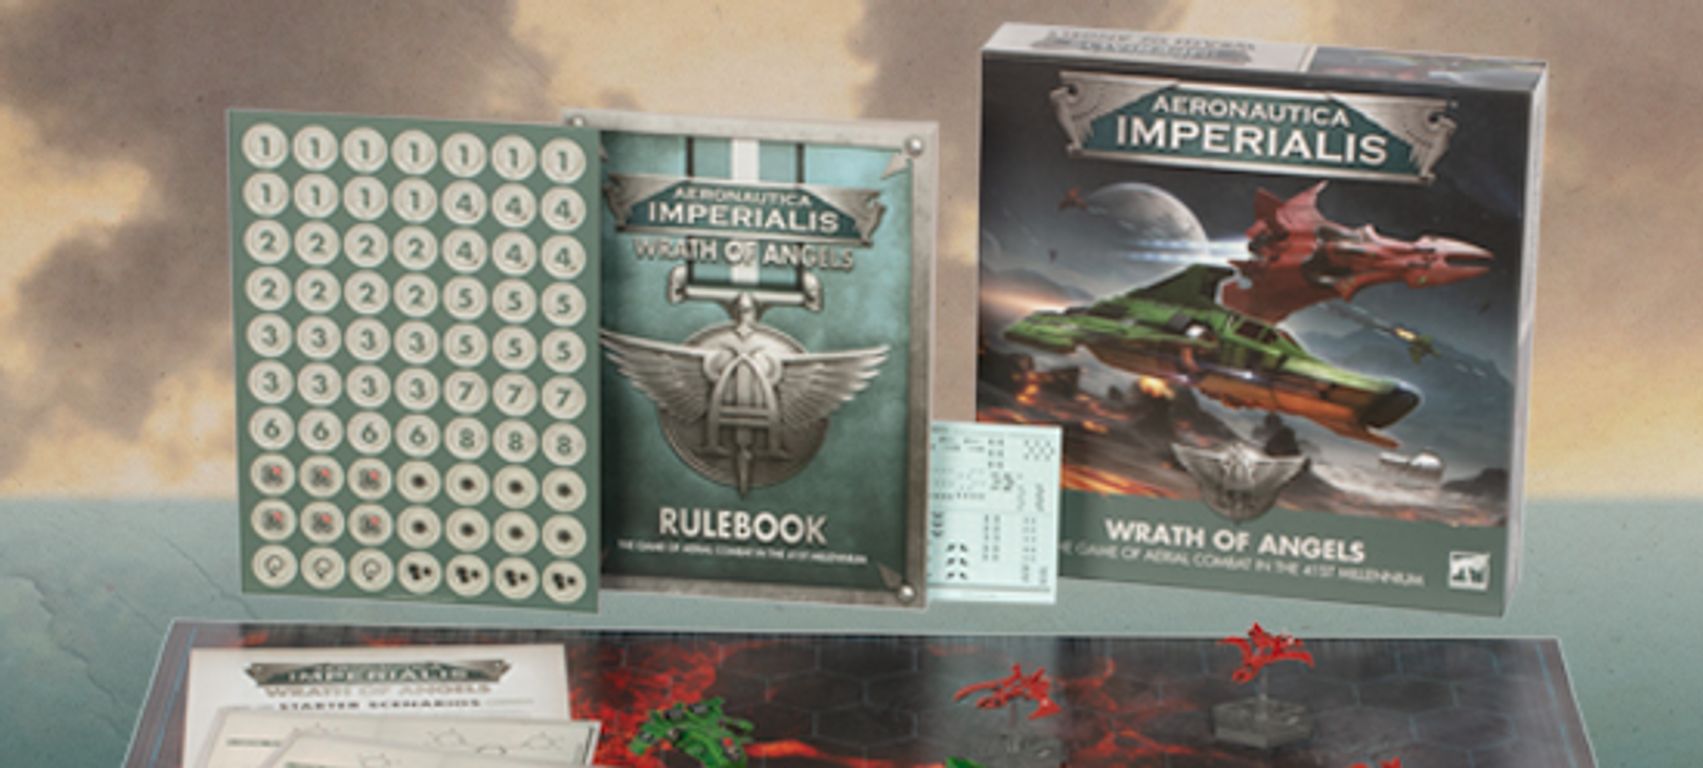 Aeronautica Imperialis: Wrath of Angels komponenten